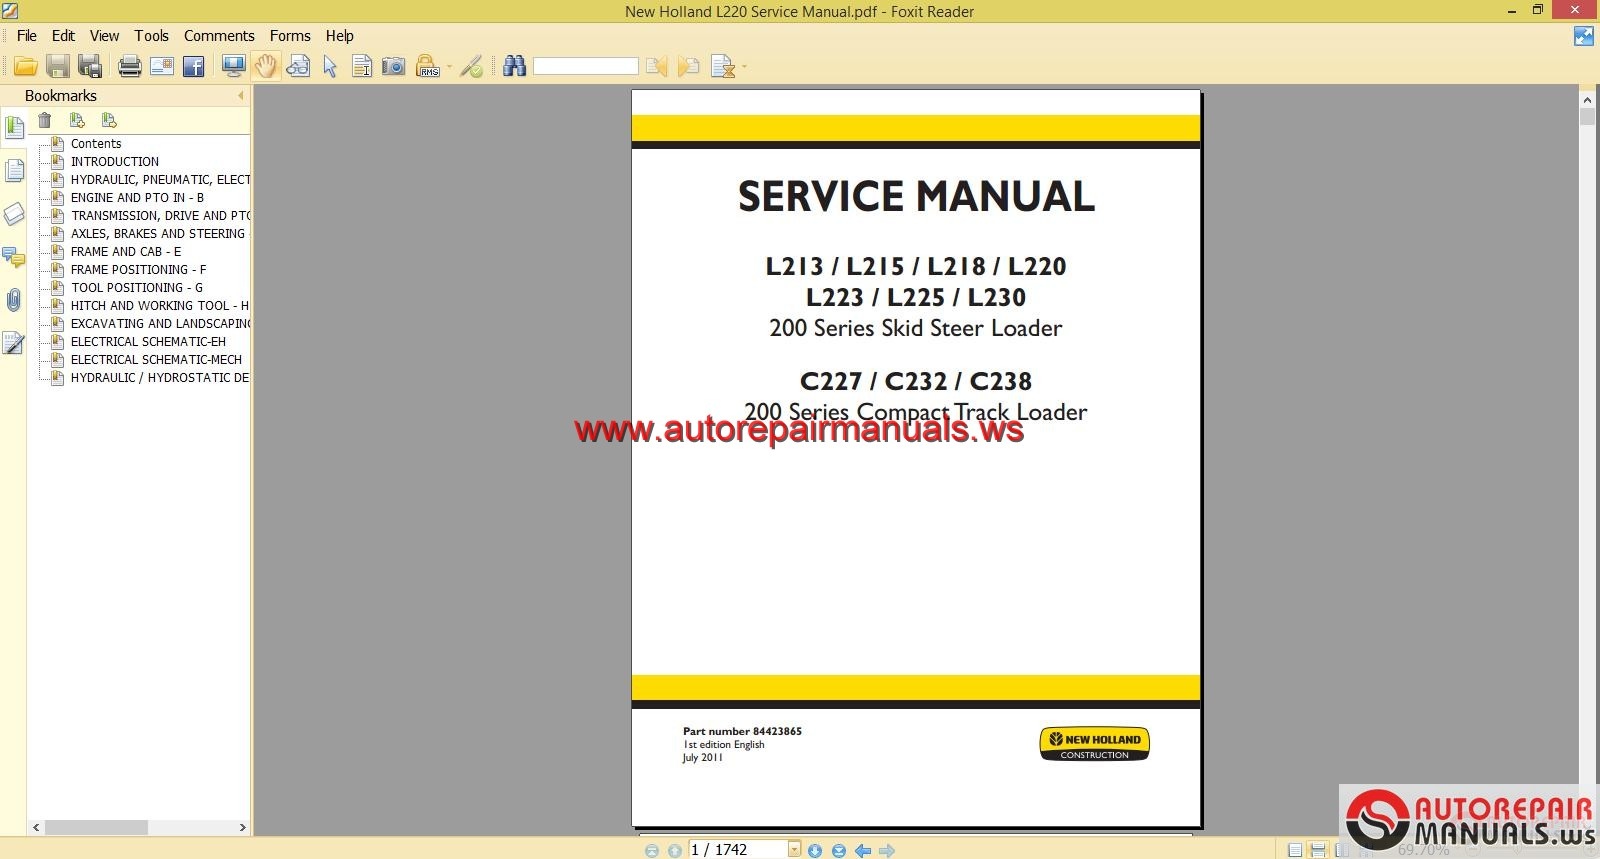 New Holland L220 Service Manual | Auto Repair Manual Forum - Heavy ...